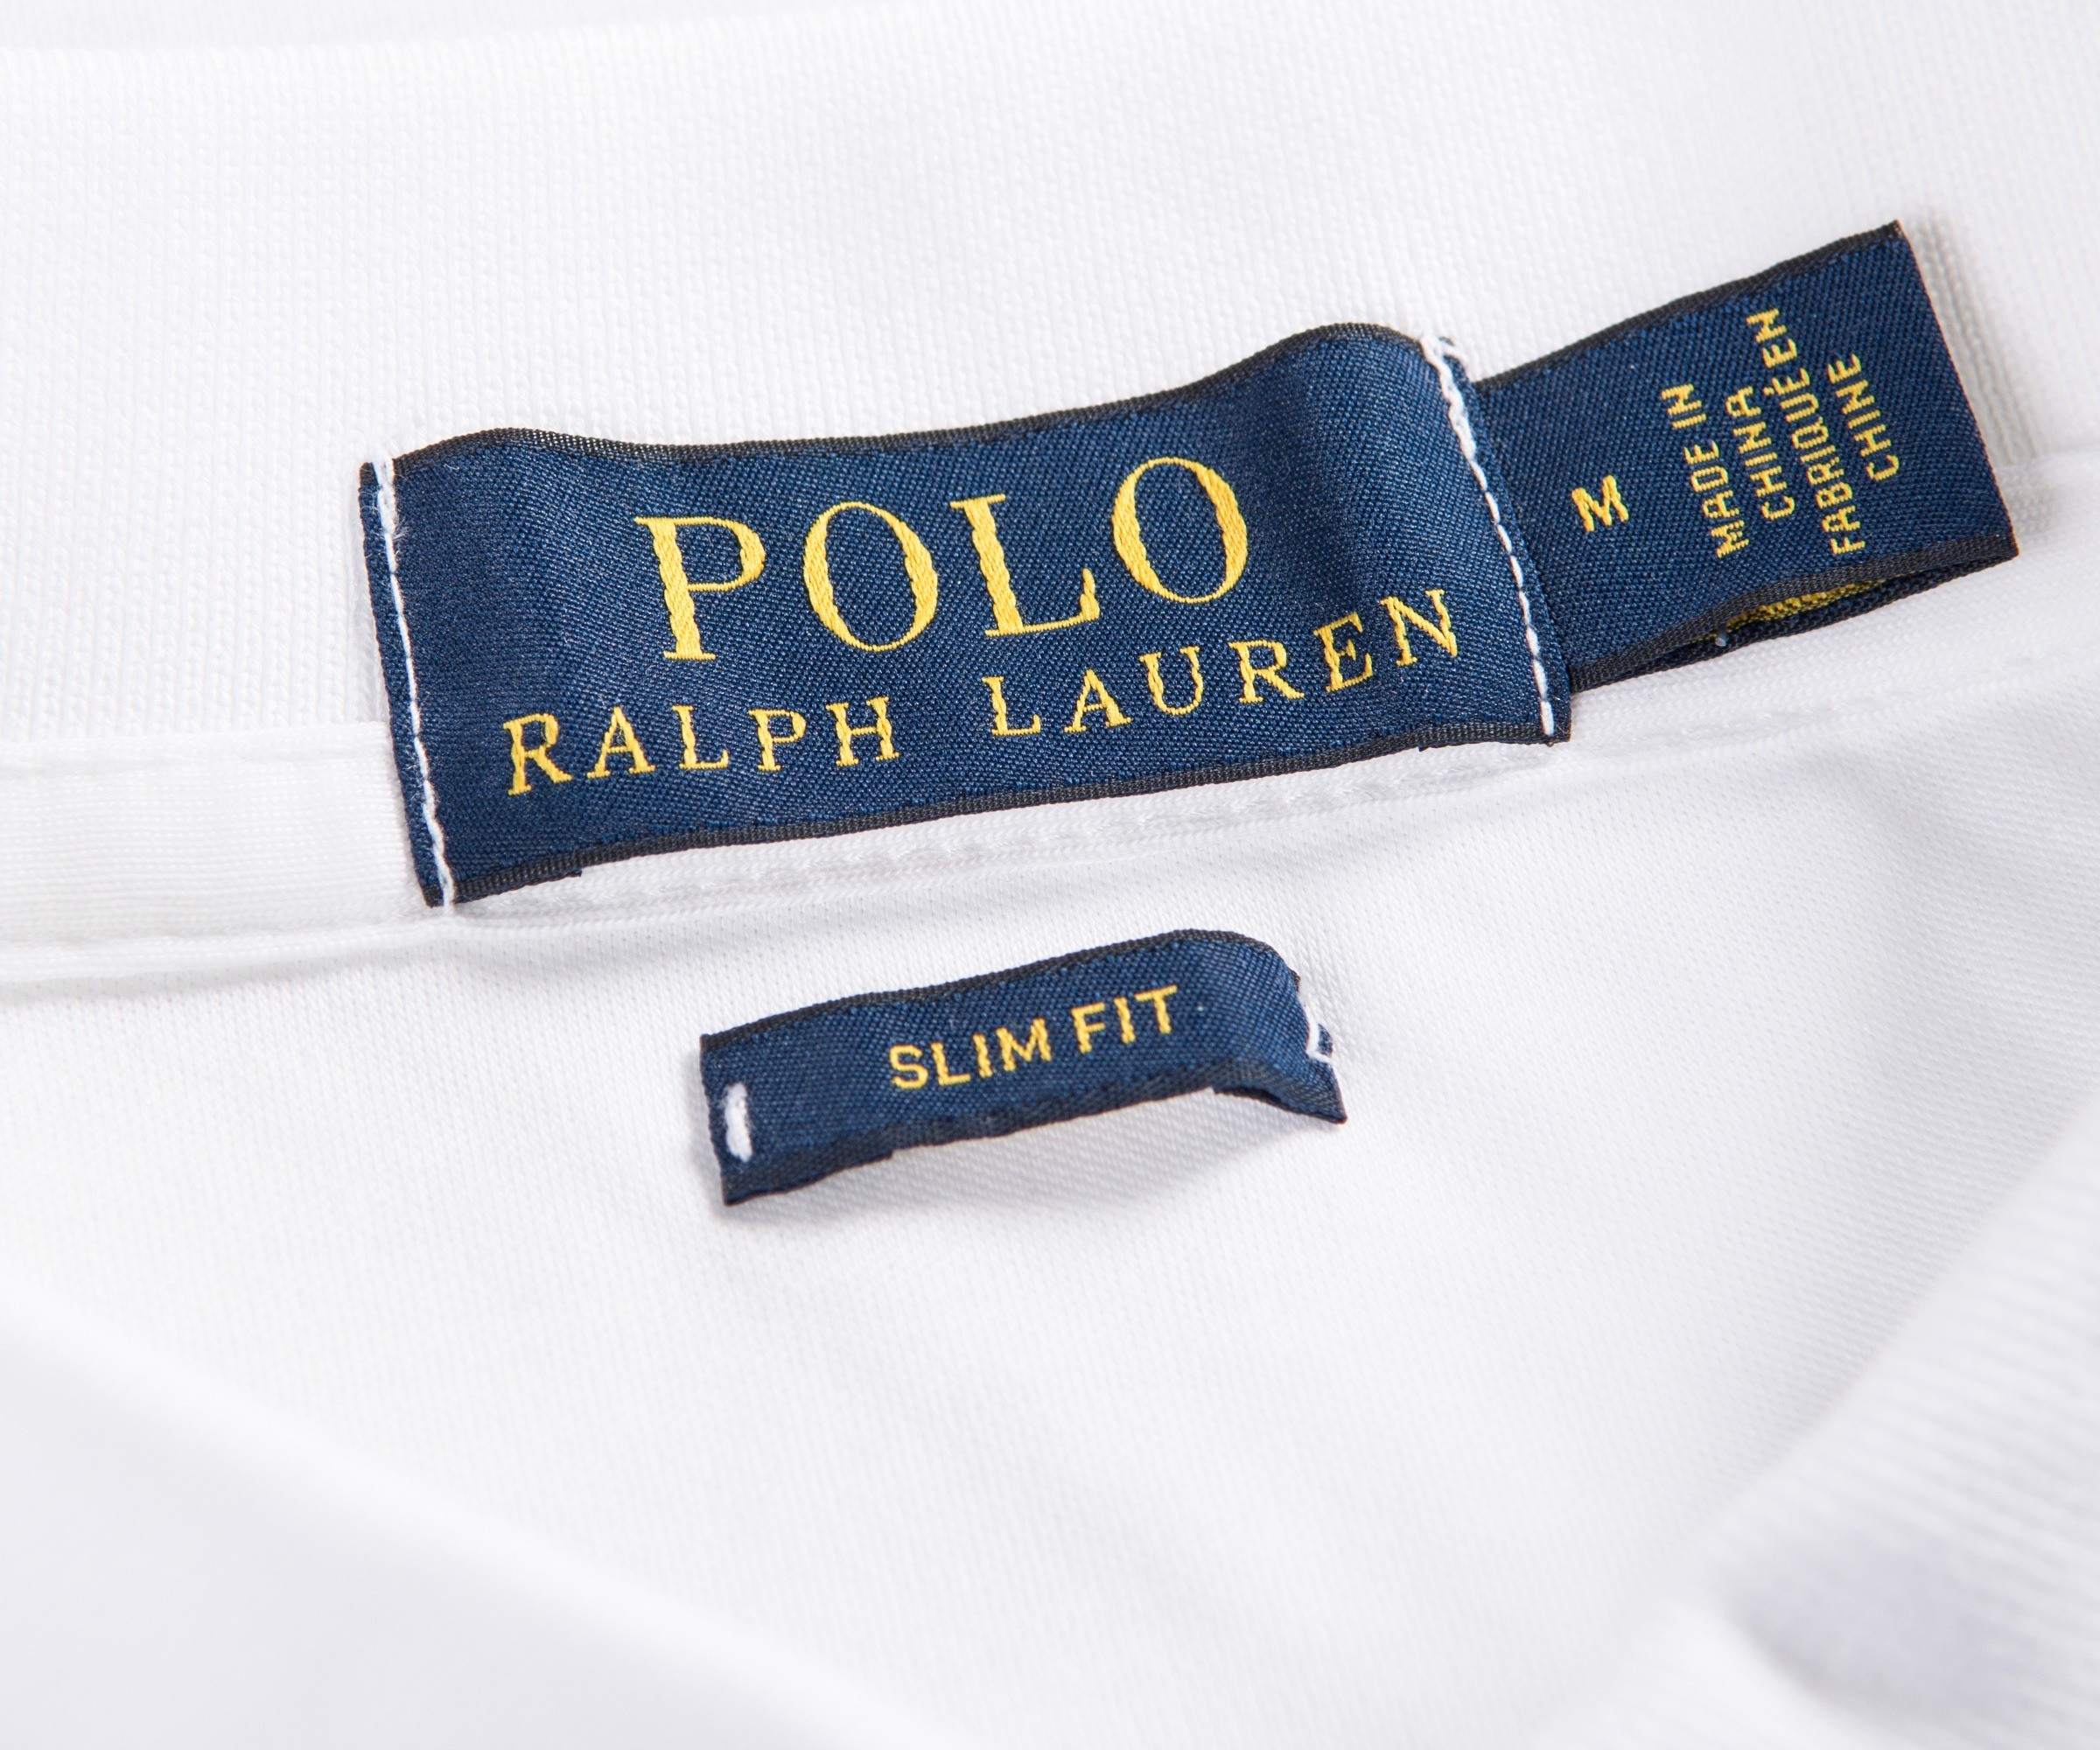 Polo Ralph Lauren Slim Fit Pima Soft Touch Polo White